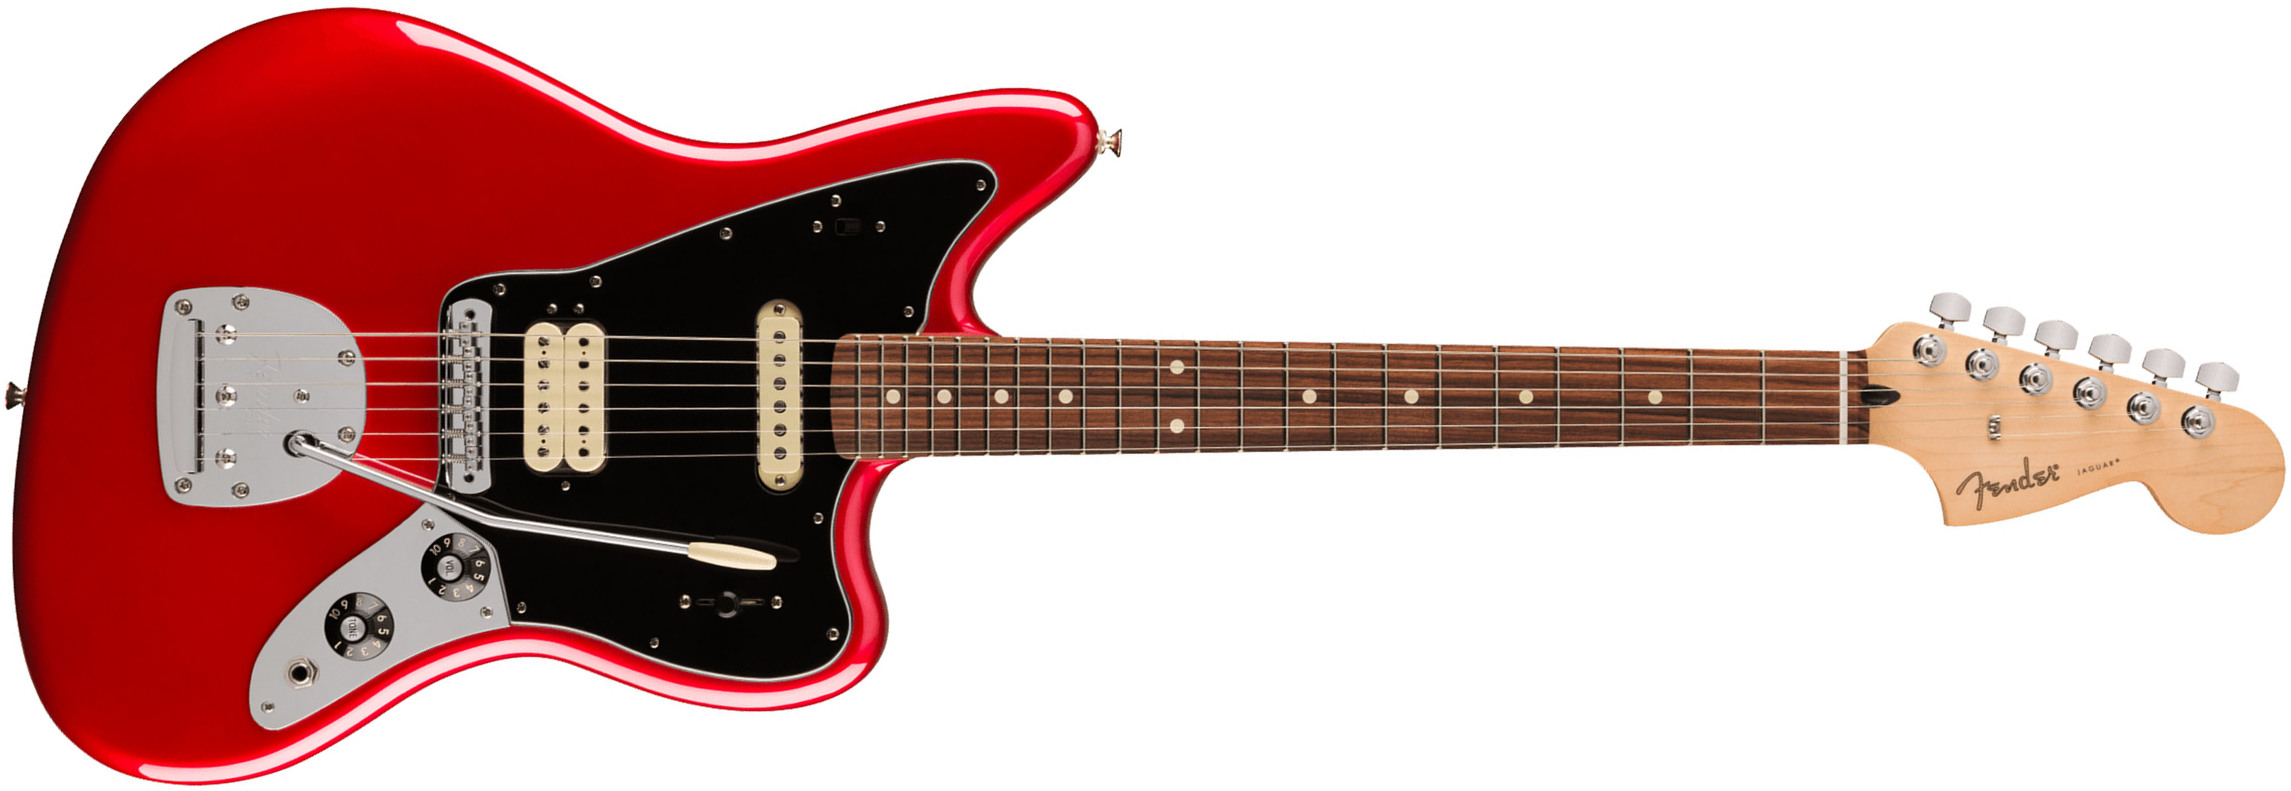 Fender Jaguar Player Mex 2023 Hs Trem Pf - Candy Apple Red - Retro rock electric guitar - Main picture